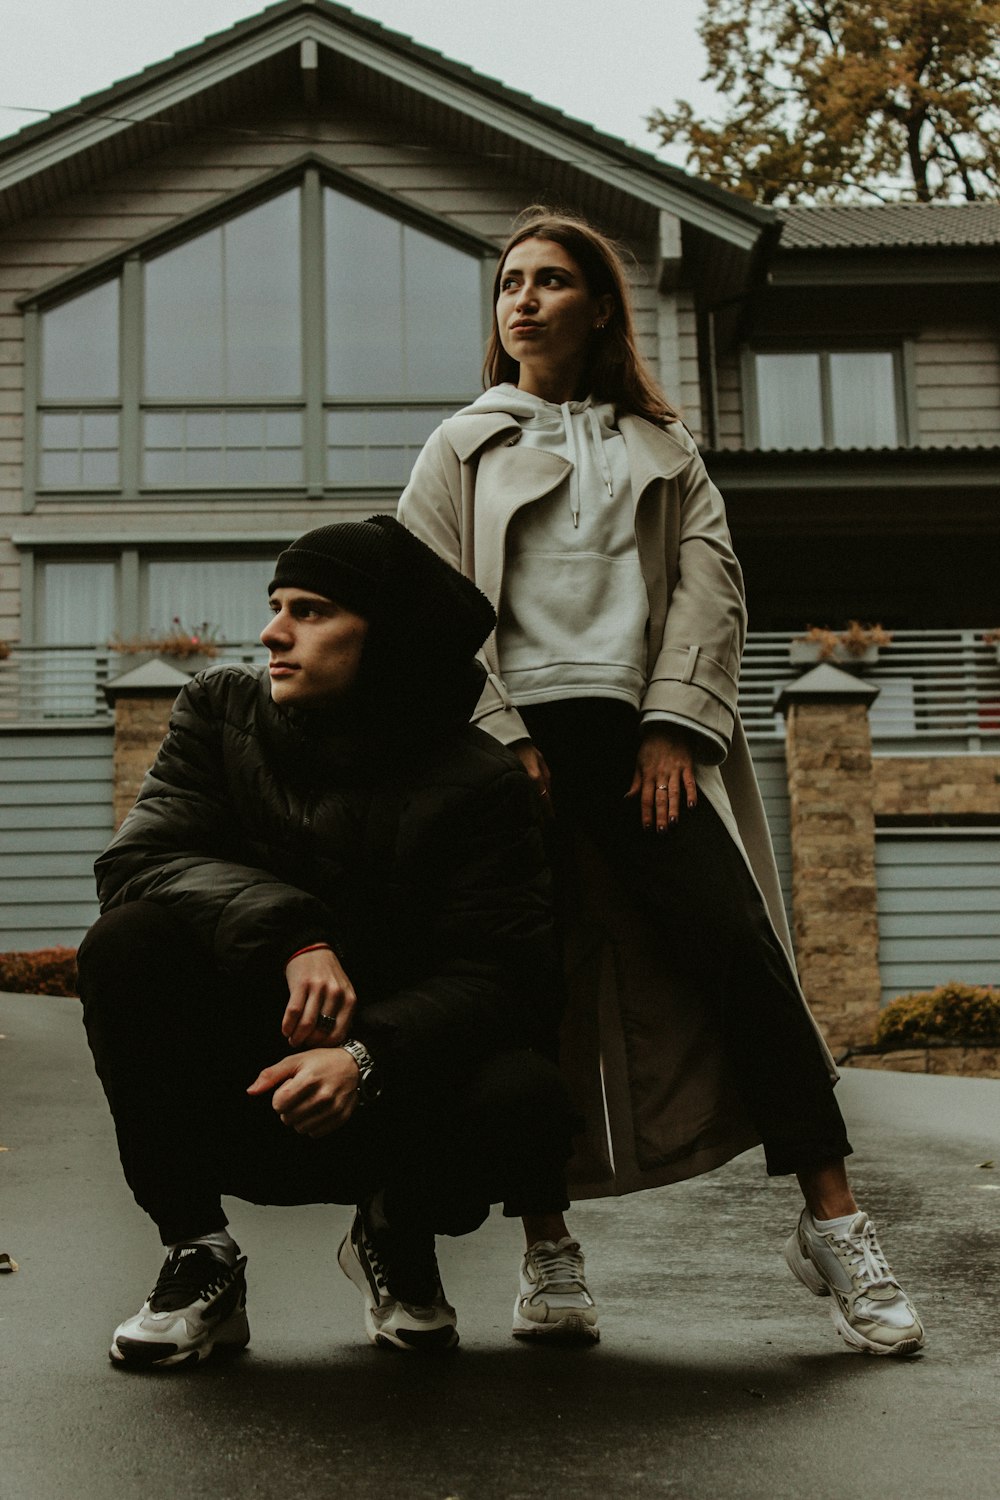 man in black jacket sitting beside woman in black coat